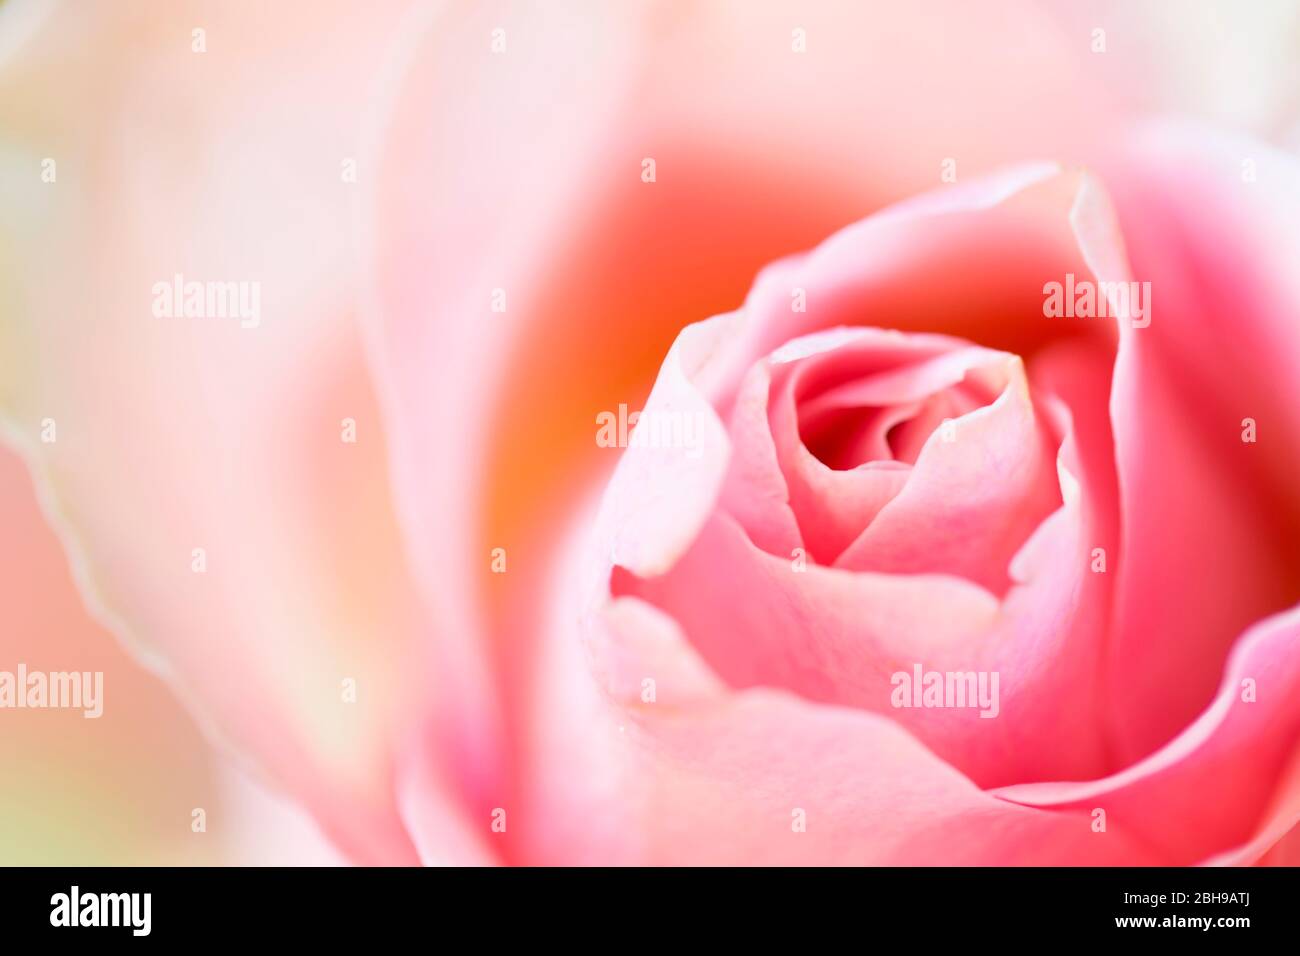 rosebud, couleur rose pastel, gros plan Banque D'Images